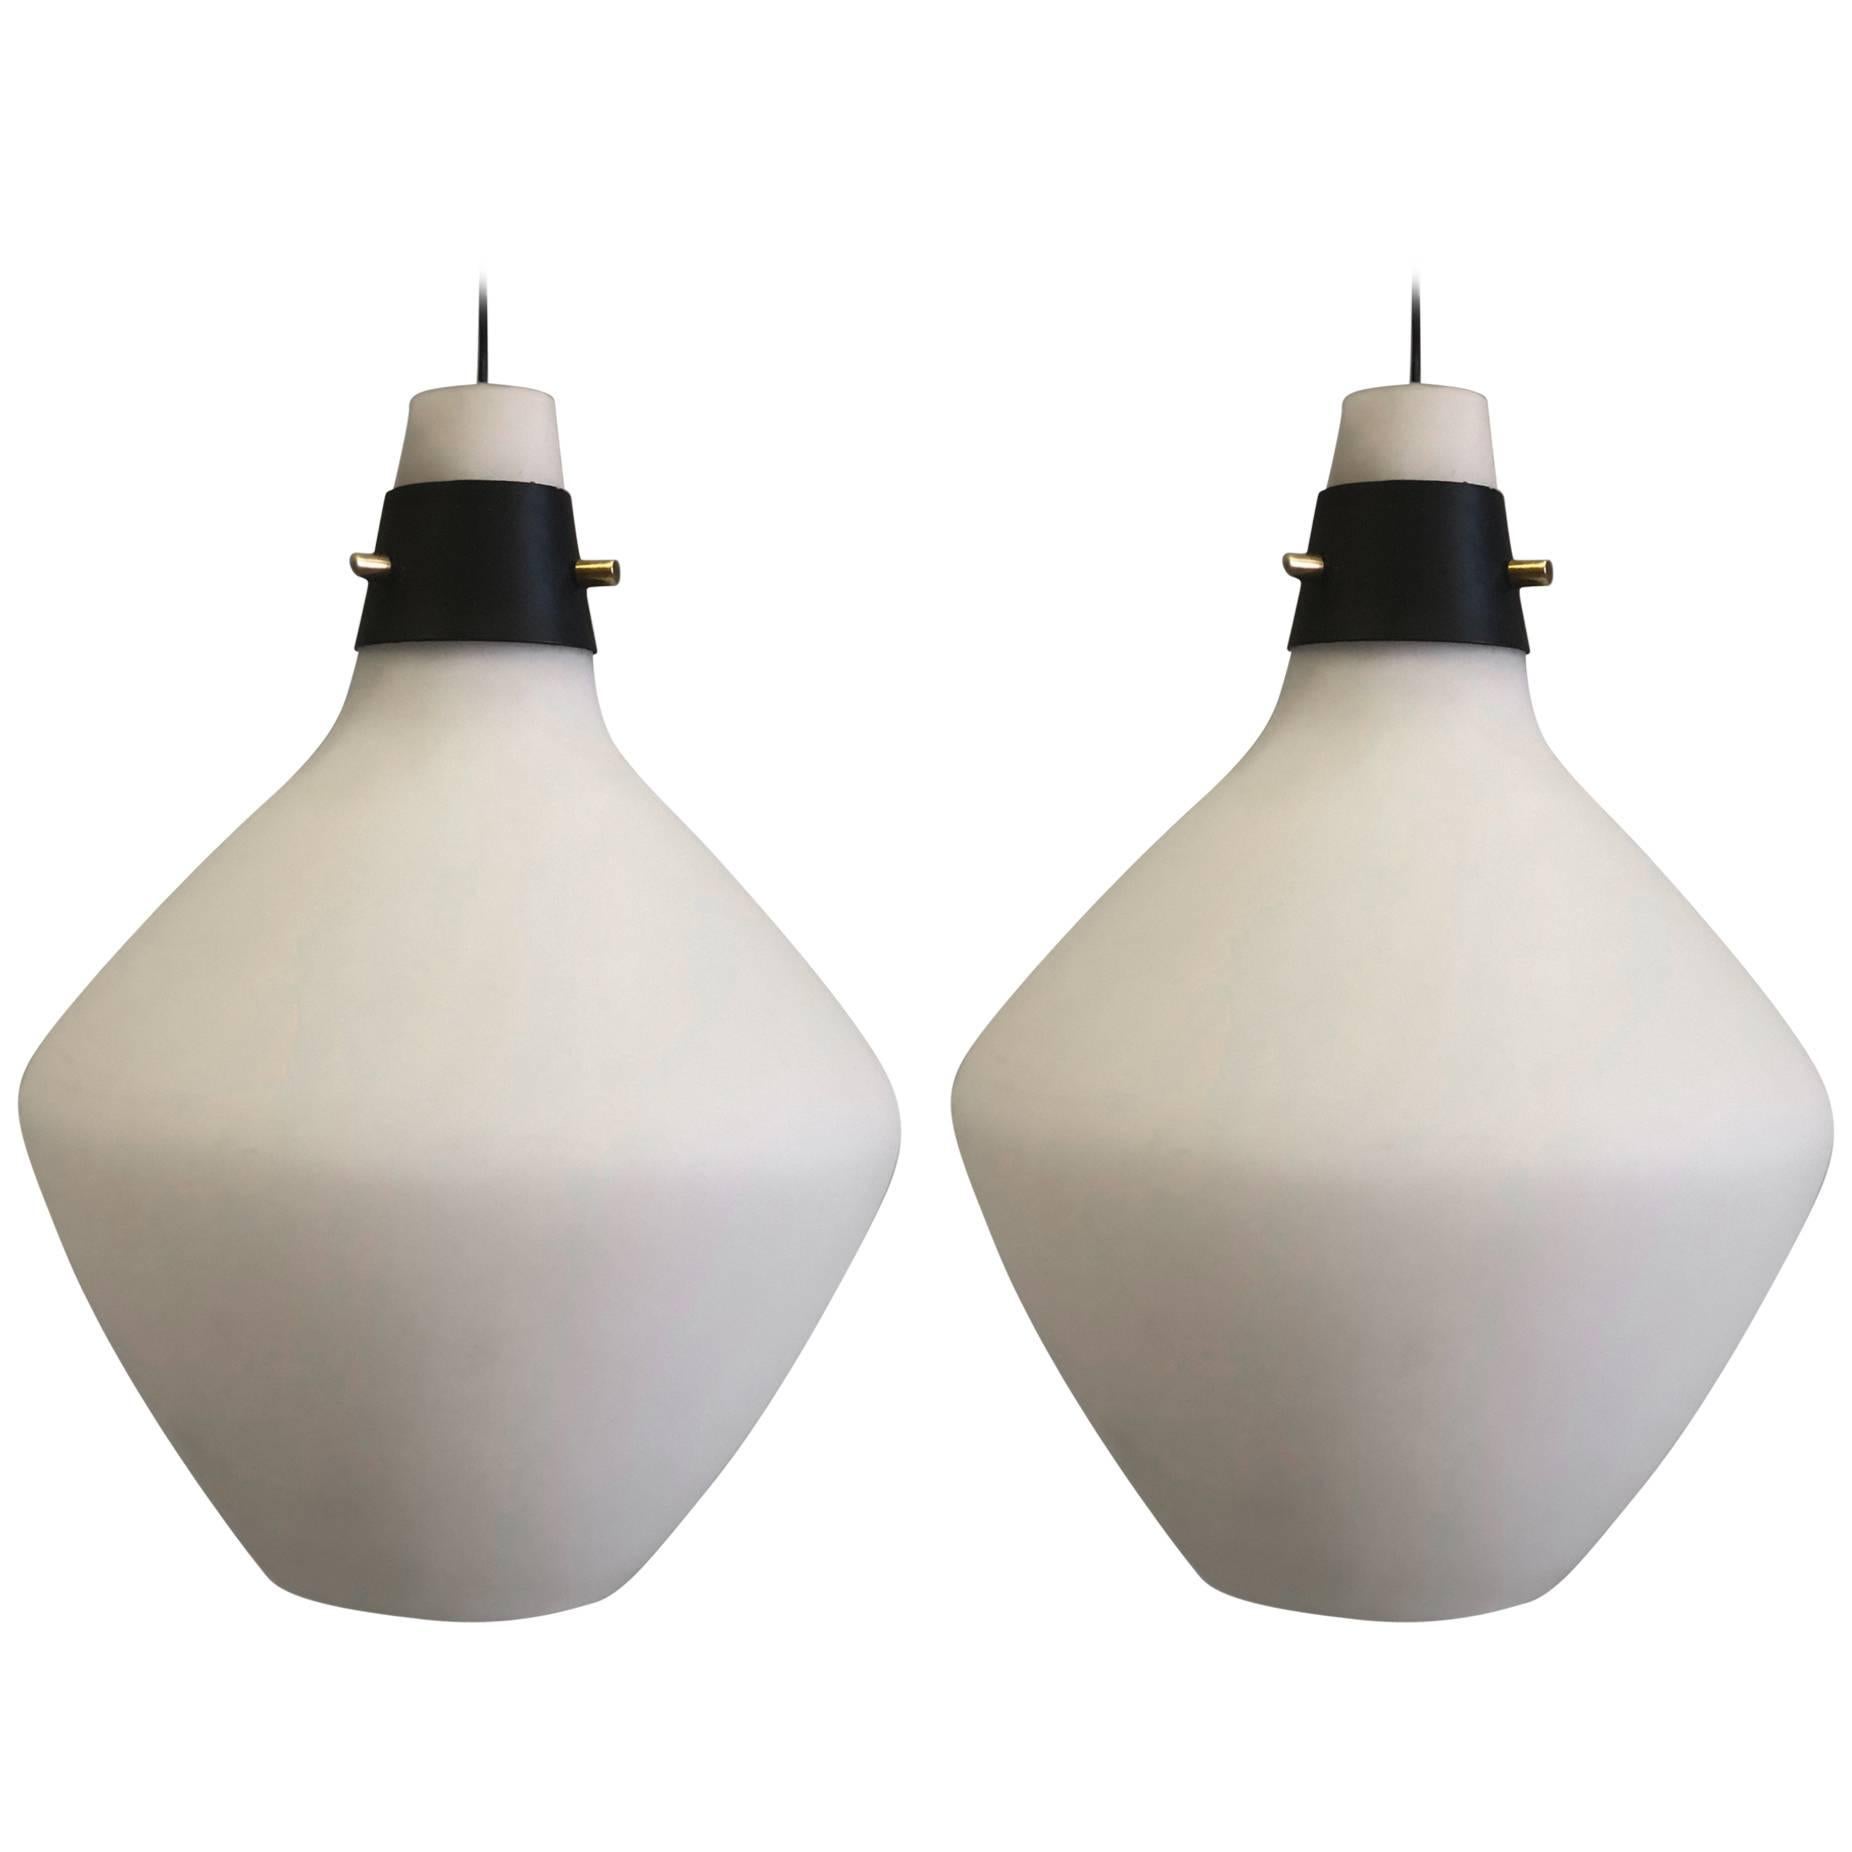 Pair of Italian Mid-Century Modern Glass Pendants / Lanterns attr. to Stilnovo